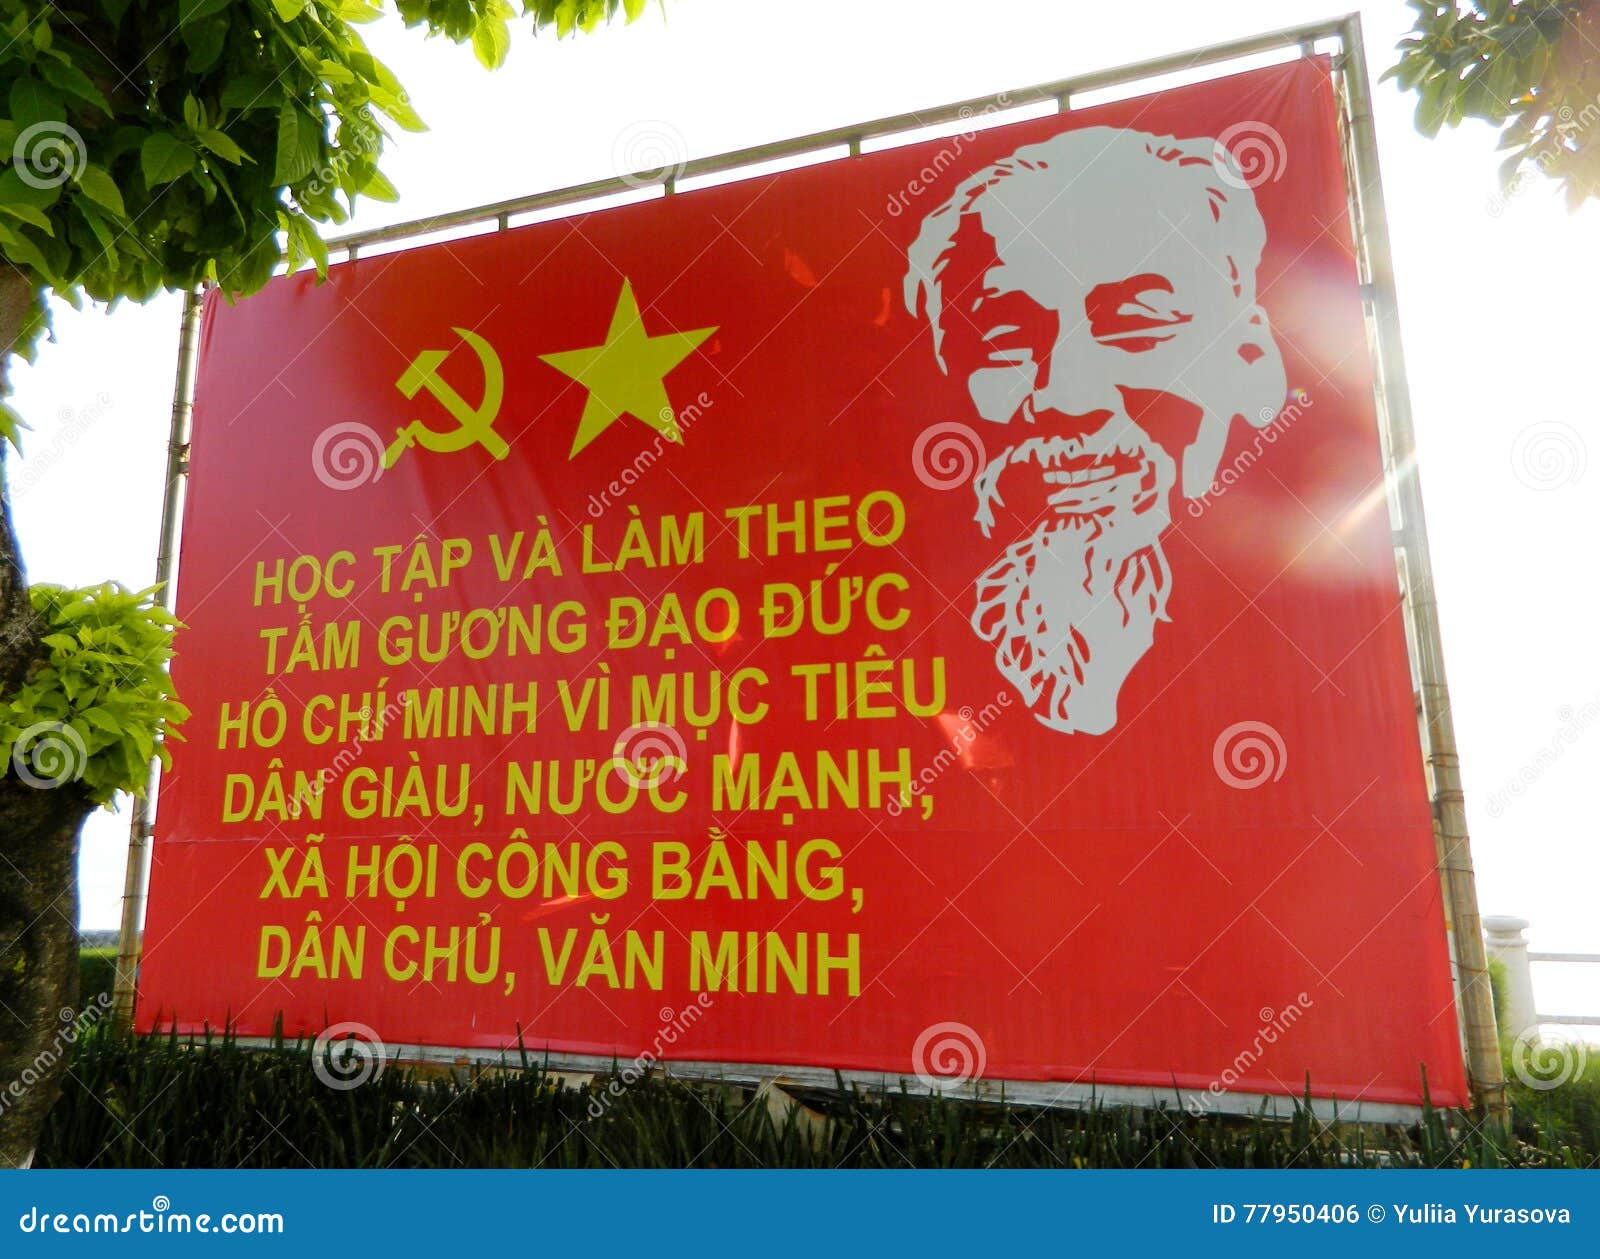 Vietnam Socialist Propaganda Billboard on the Street Editorial Photo - Image of minh, dictator: 77950406